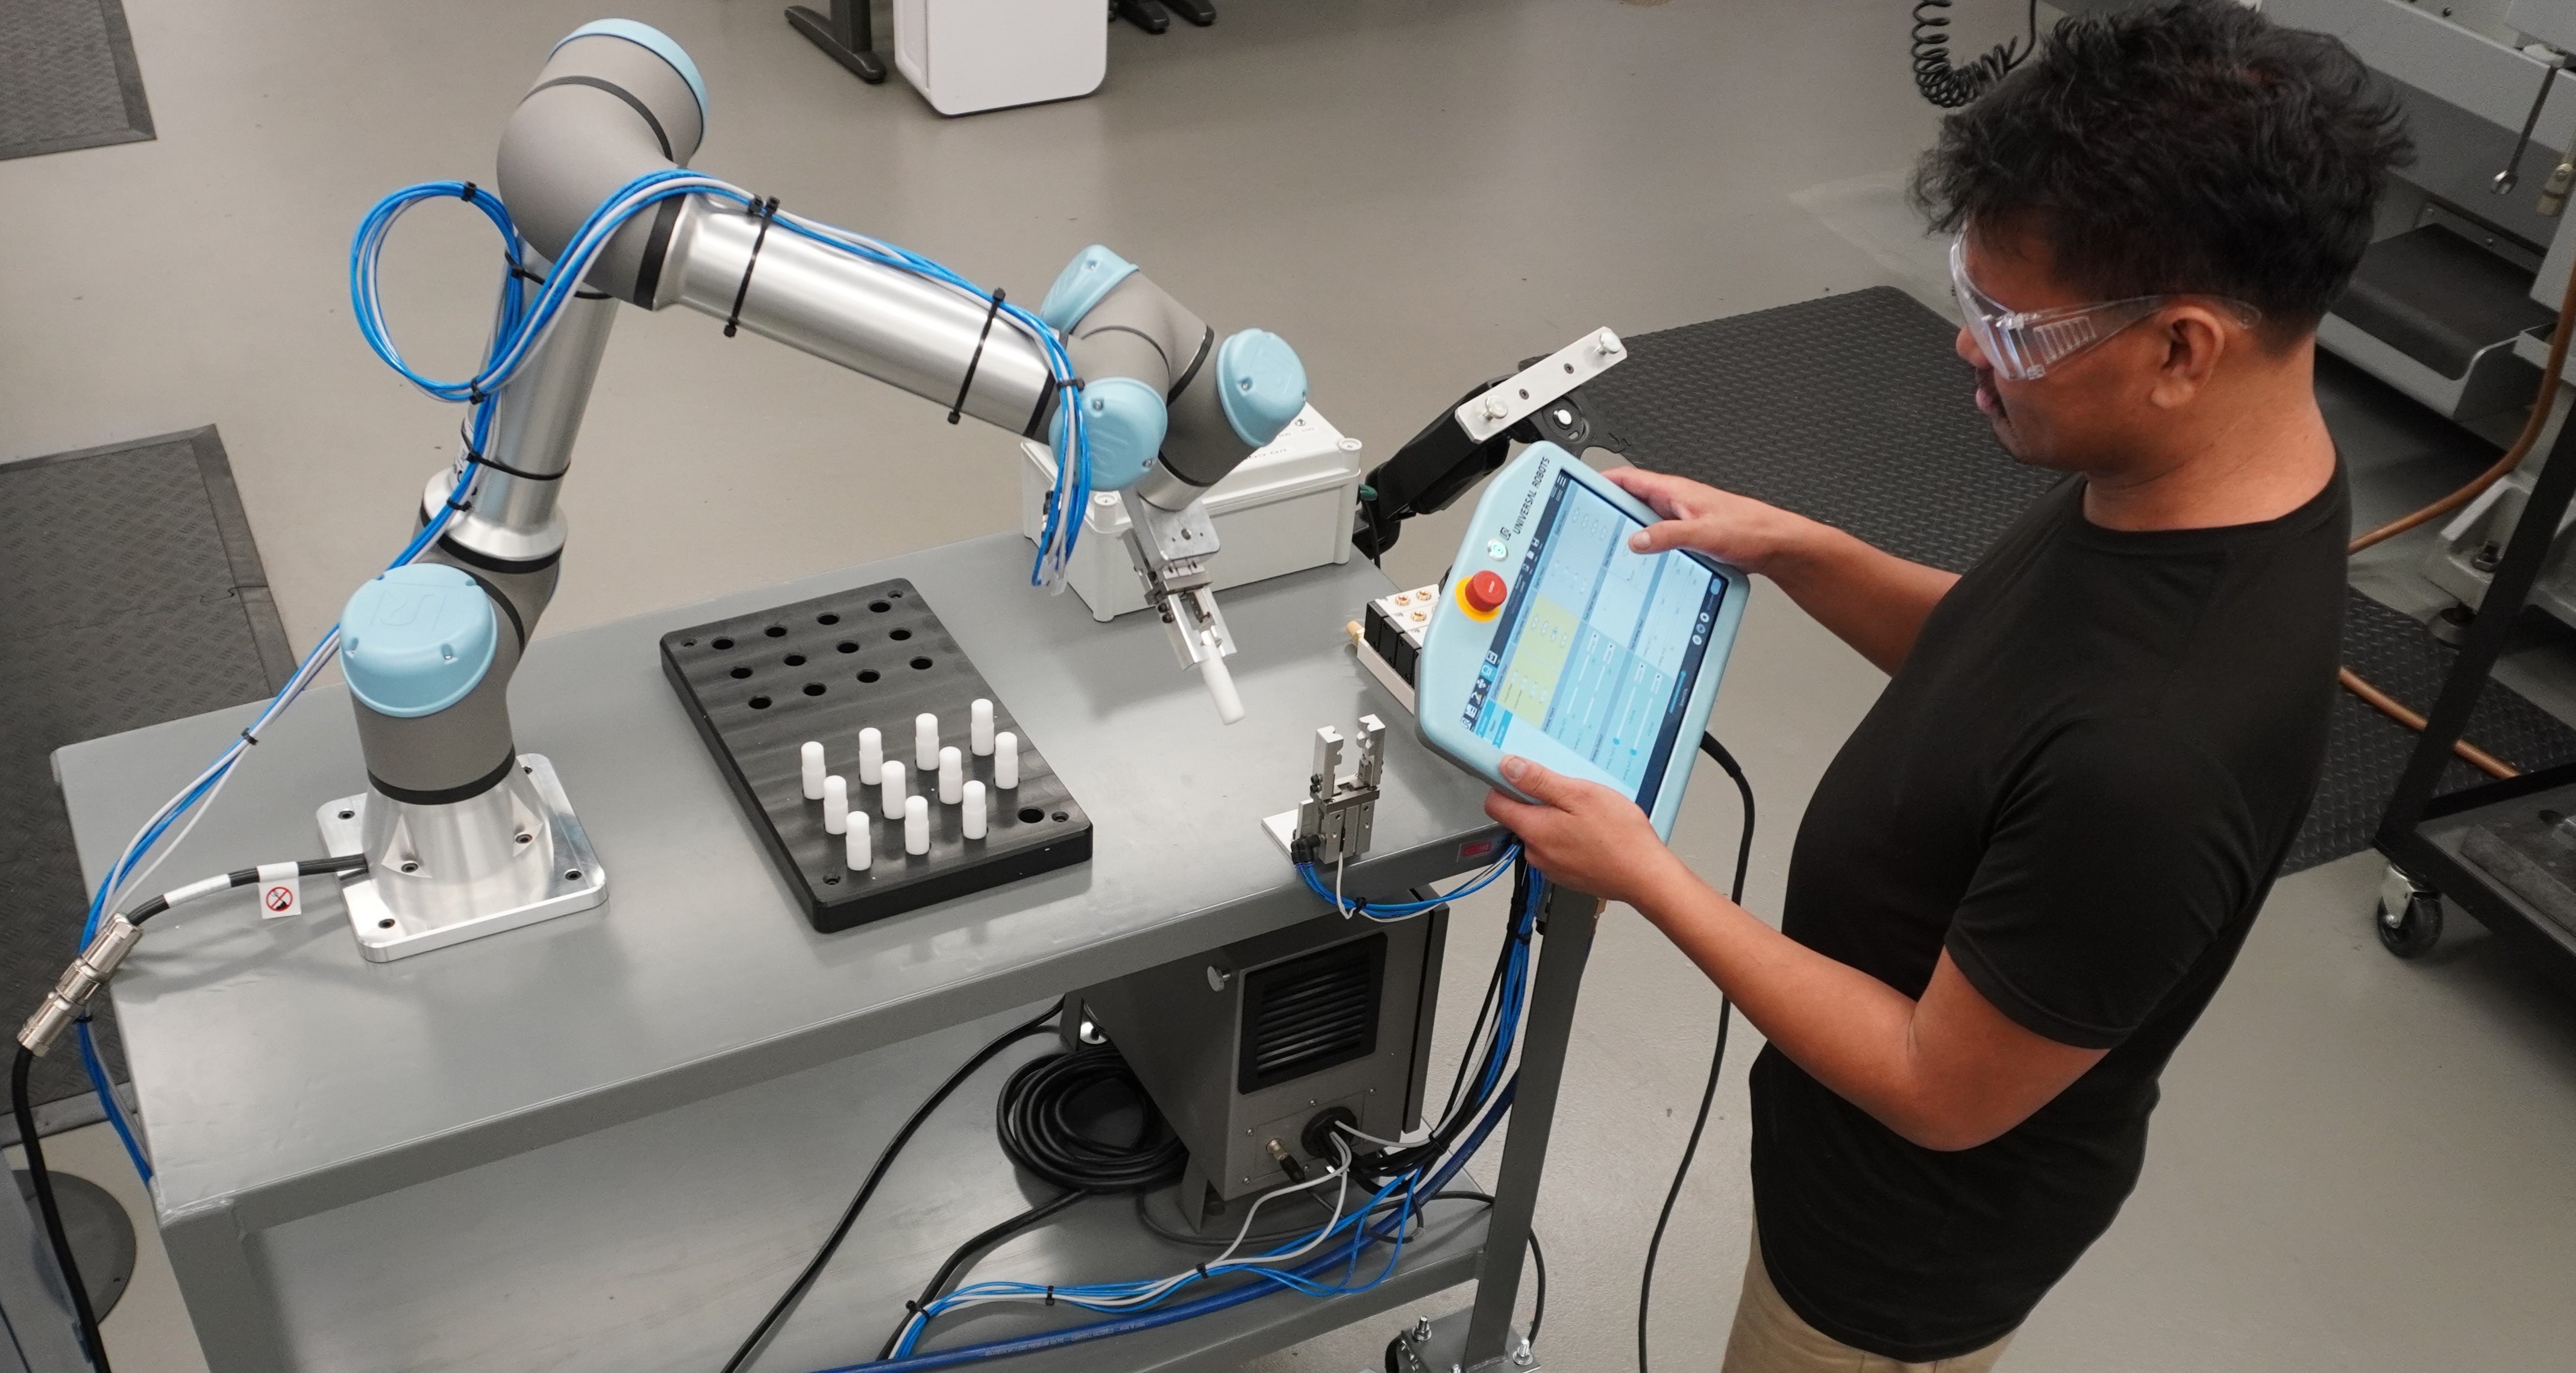 DMT male student programing robotic arm